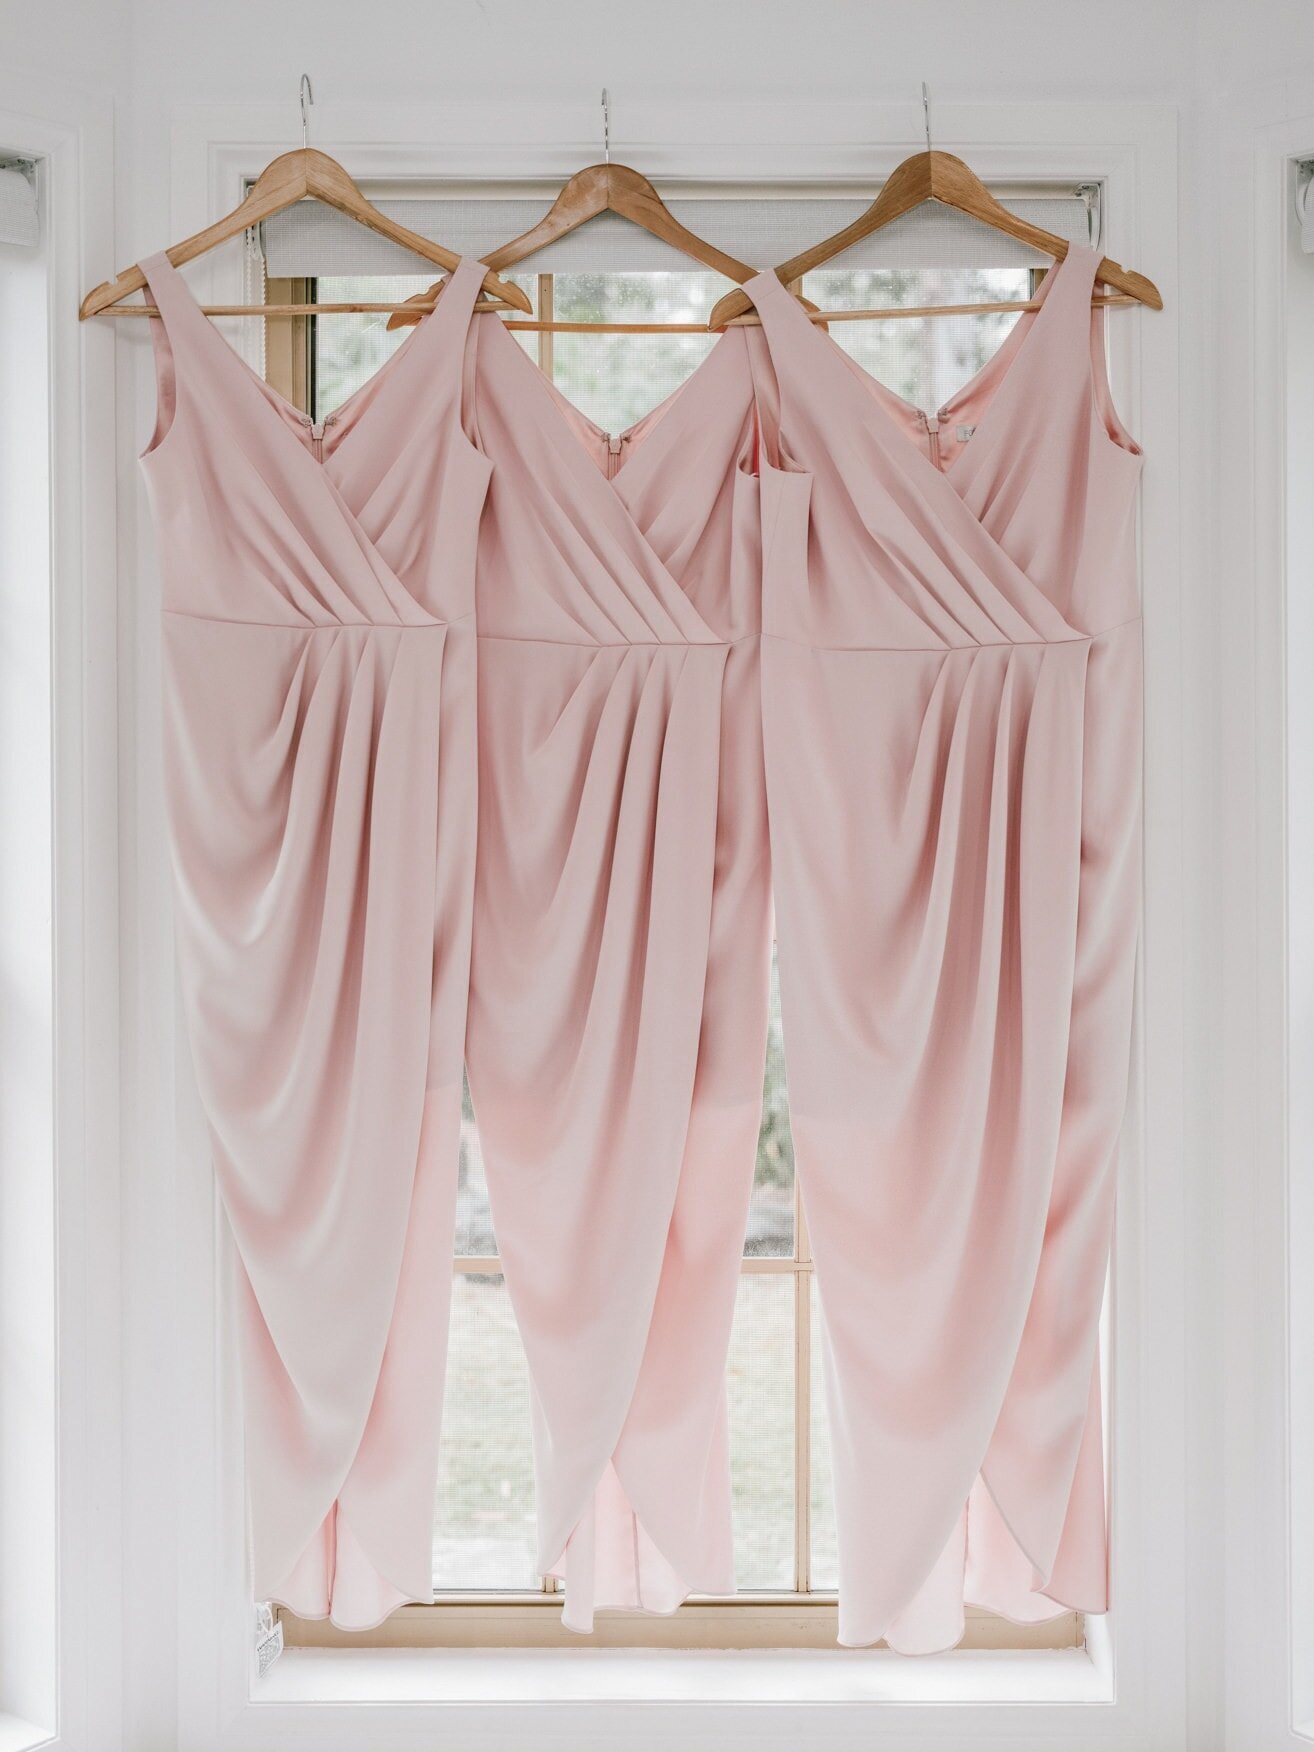 Blush bridesmaids dresses